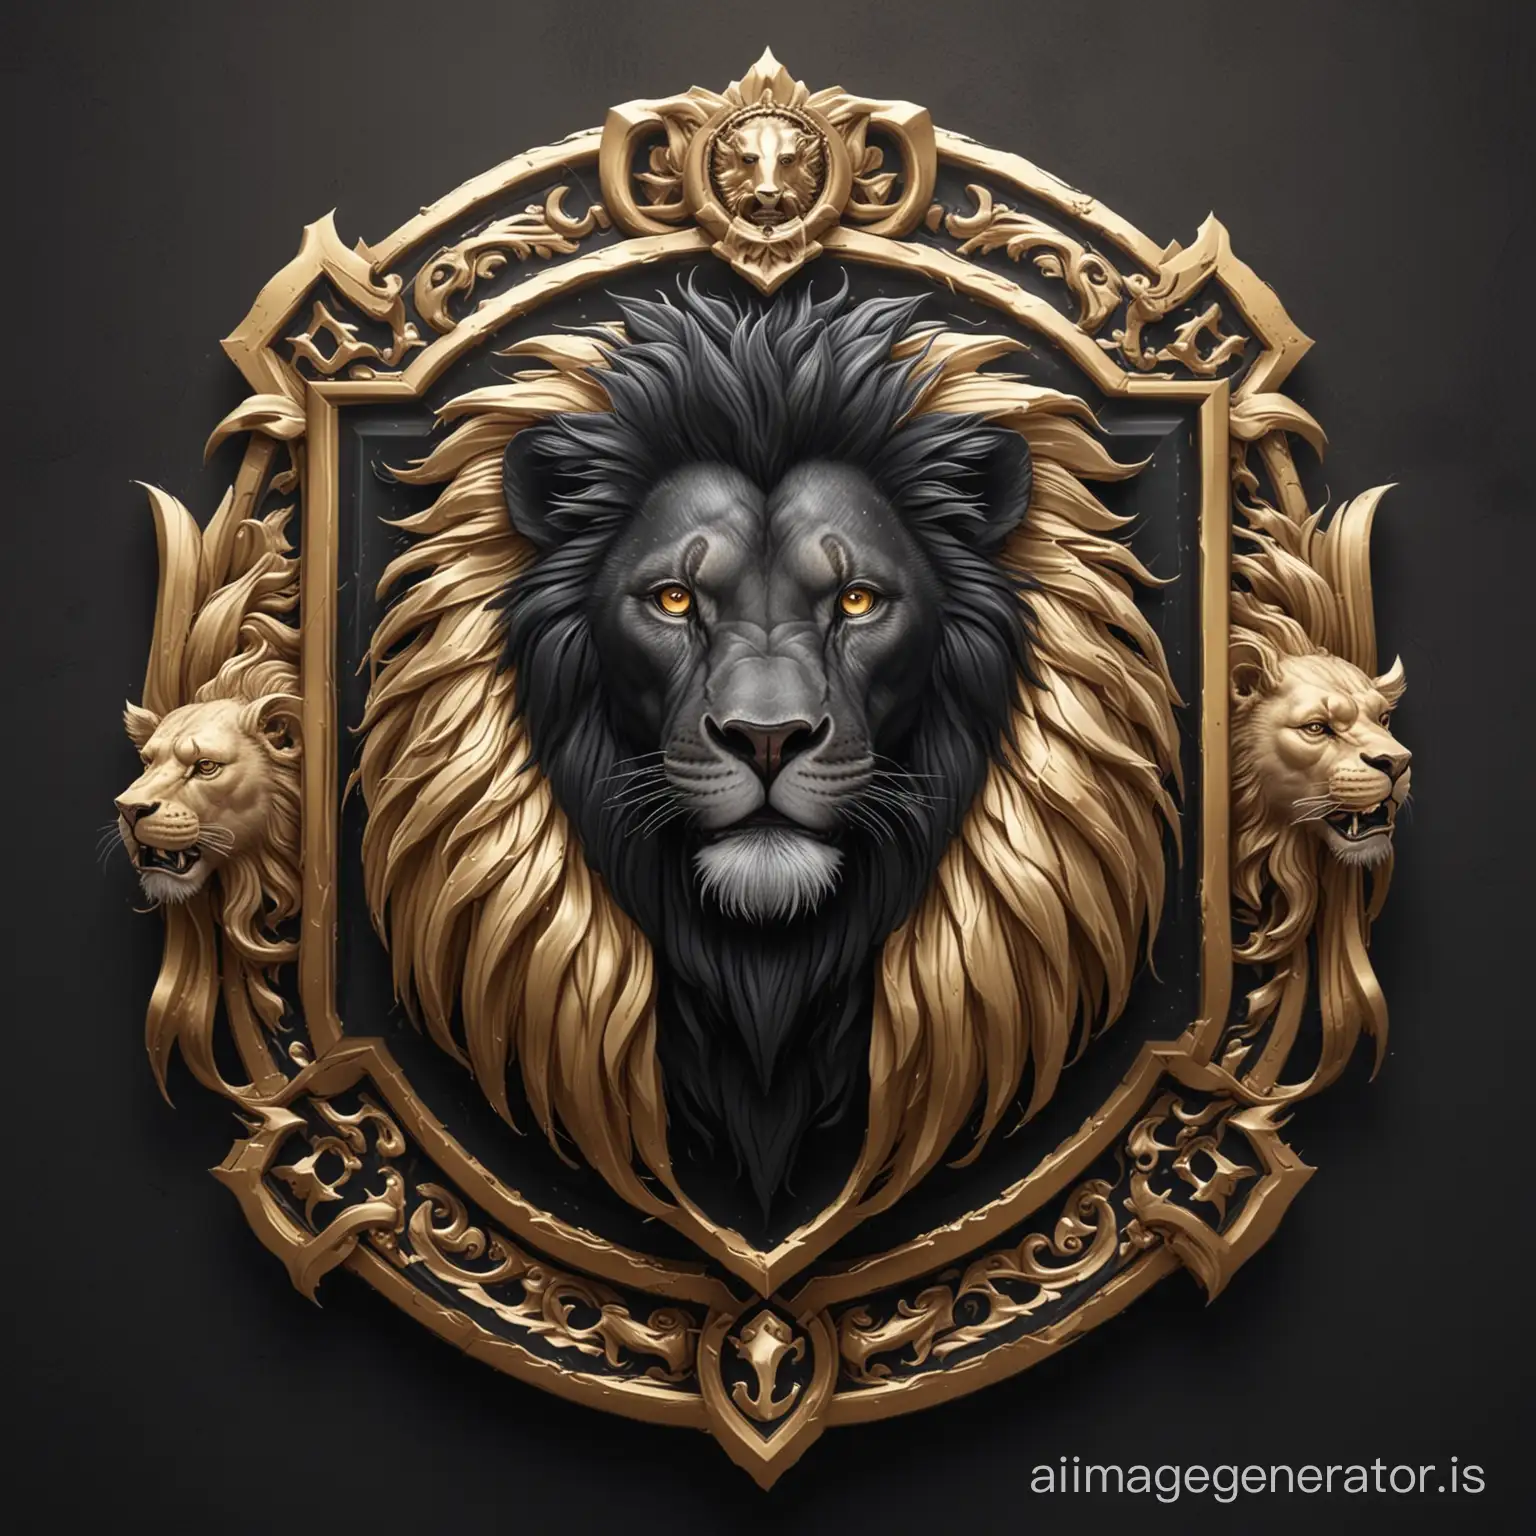 Majestic-Lion-Central-Emblem-with-Golden-and-White-Lion-Guardians